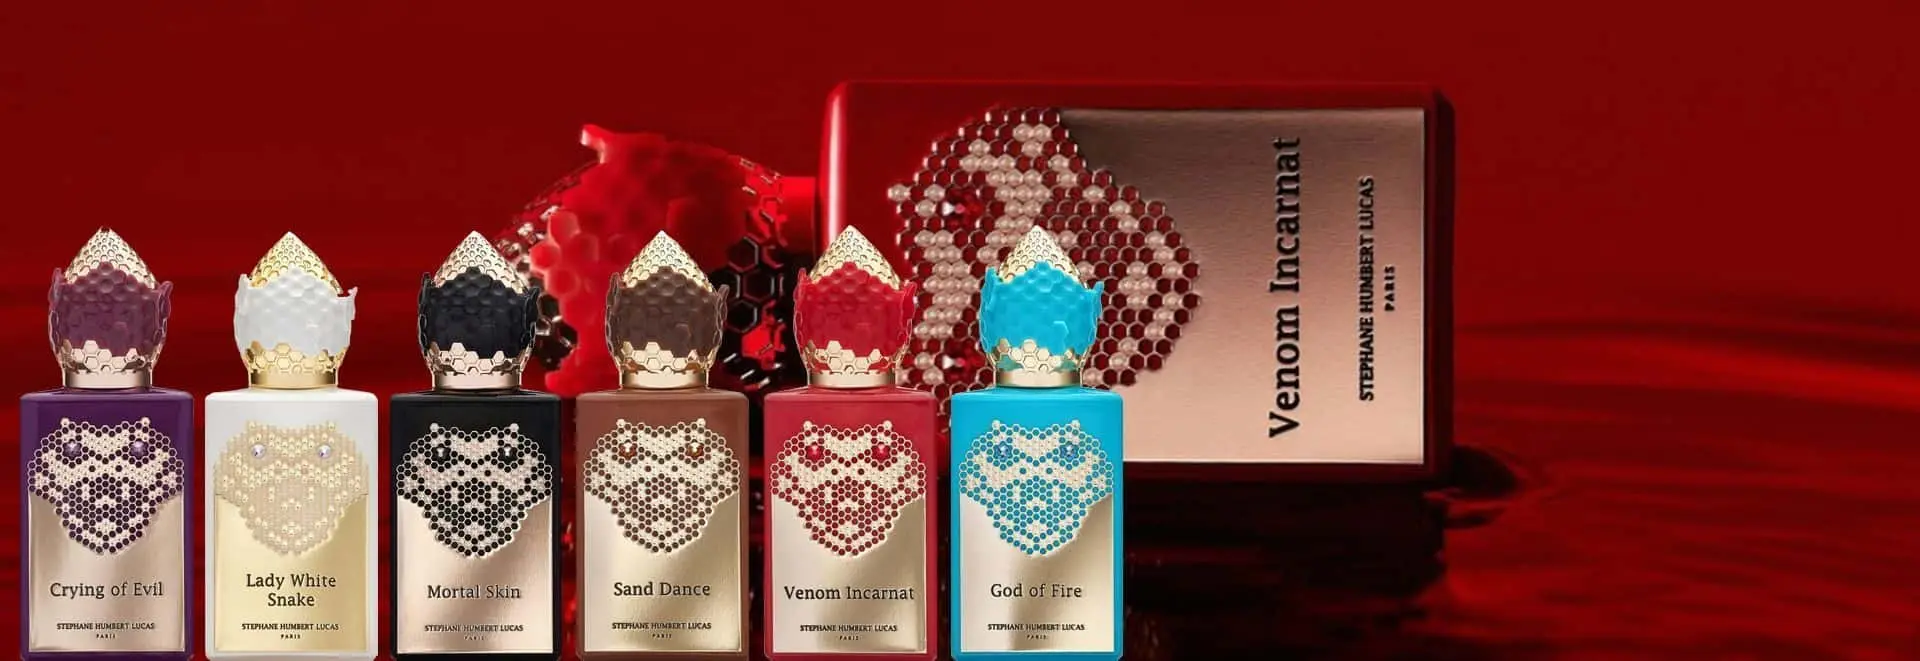 stephane humbert lucas perfumes